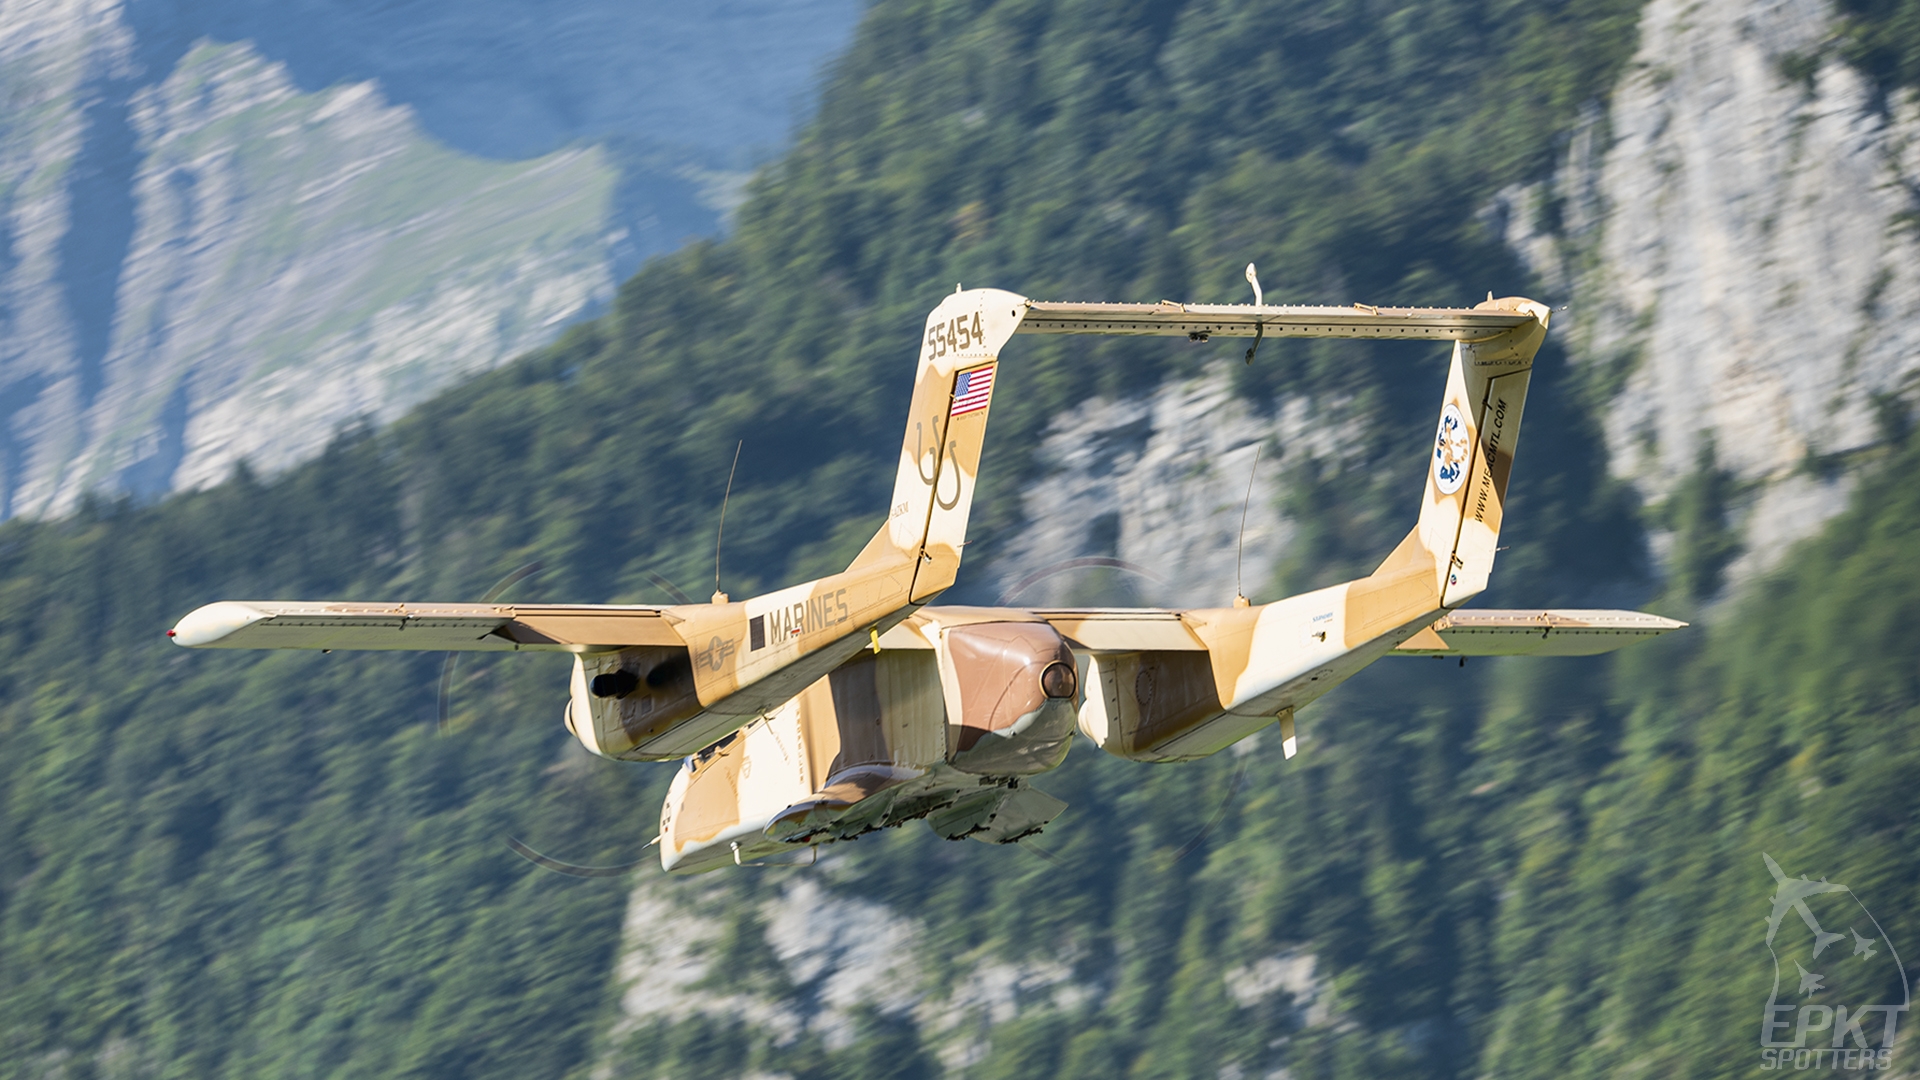 F-AZKM - North American Rockwell OV-10 B Bronco (Association Amicale des Avions Anciens de la Drôme) / Mollis Airport - Mollis Switzerland [LSMF/]